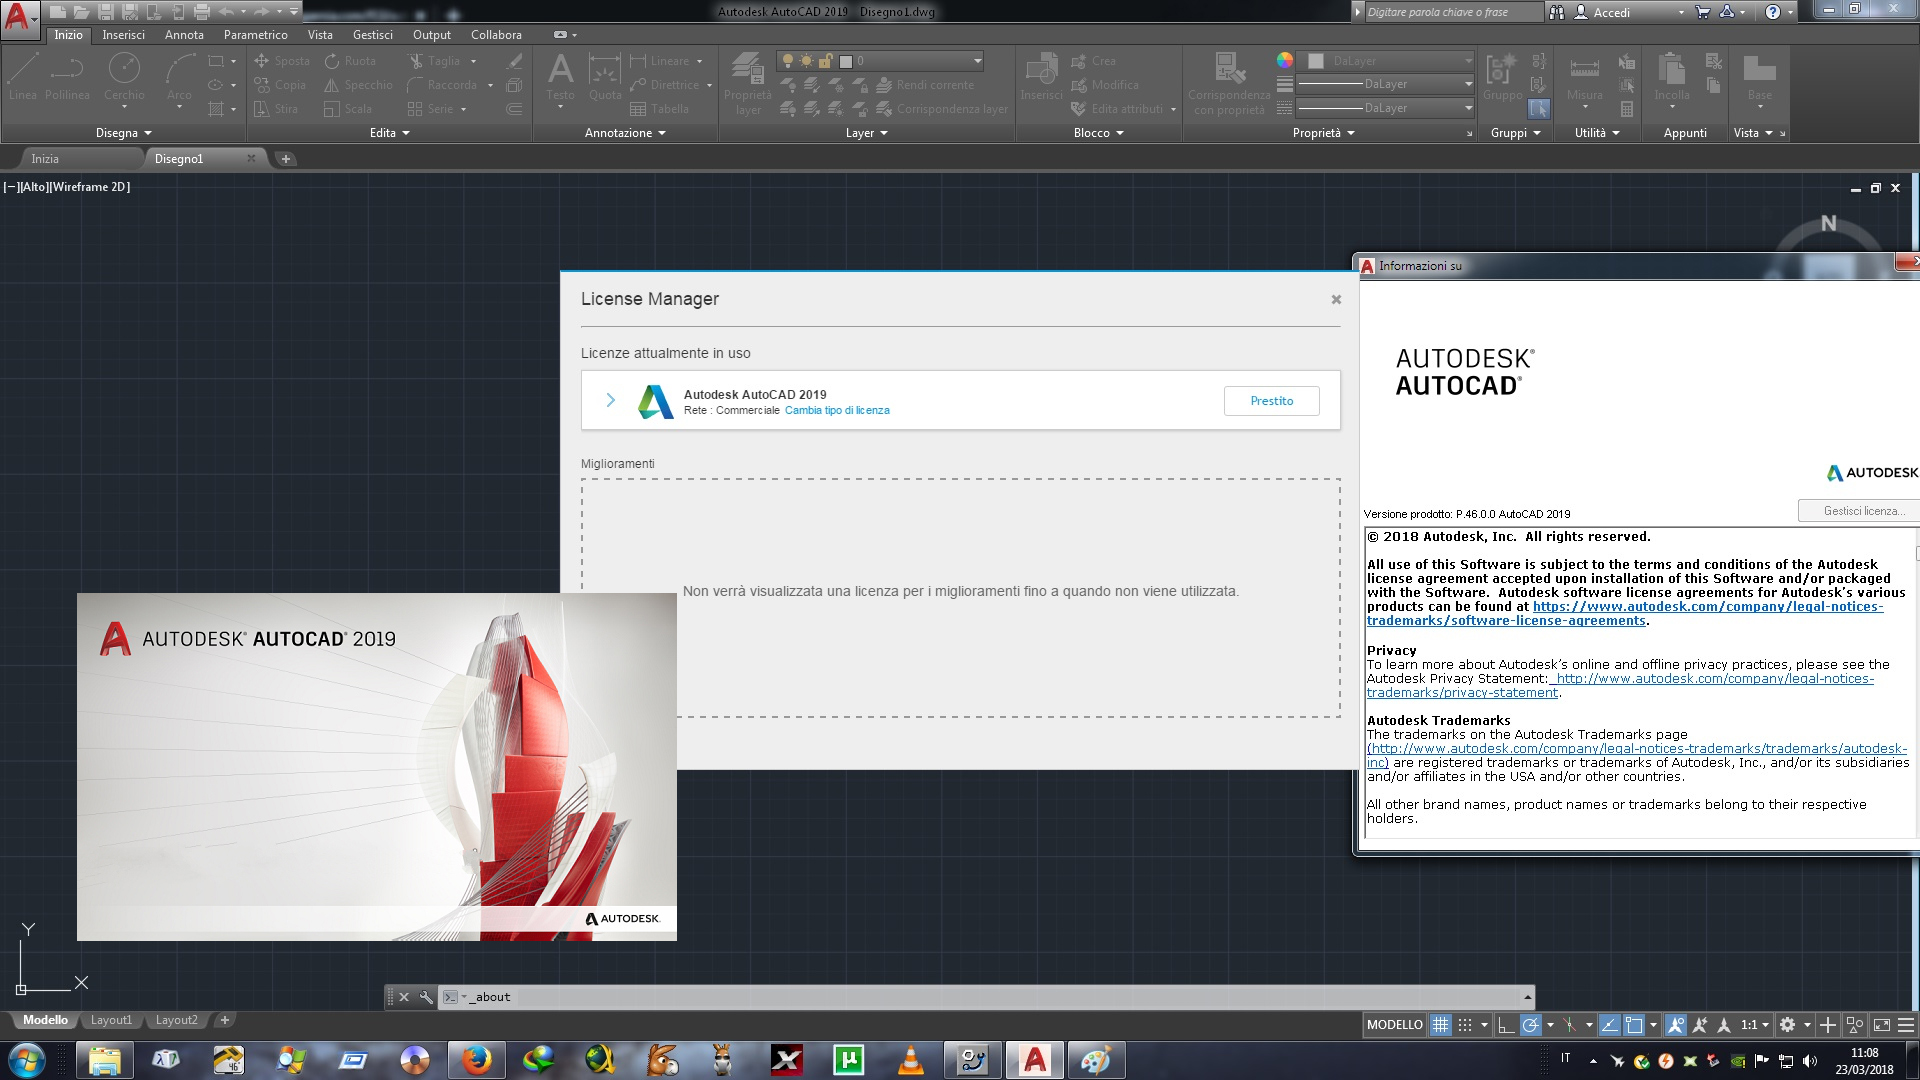 Autodesk autocad 2013 acismobj19.dbx unhandled exception 1